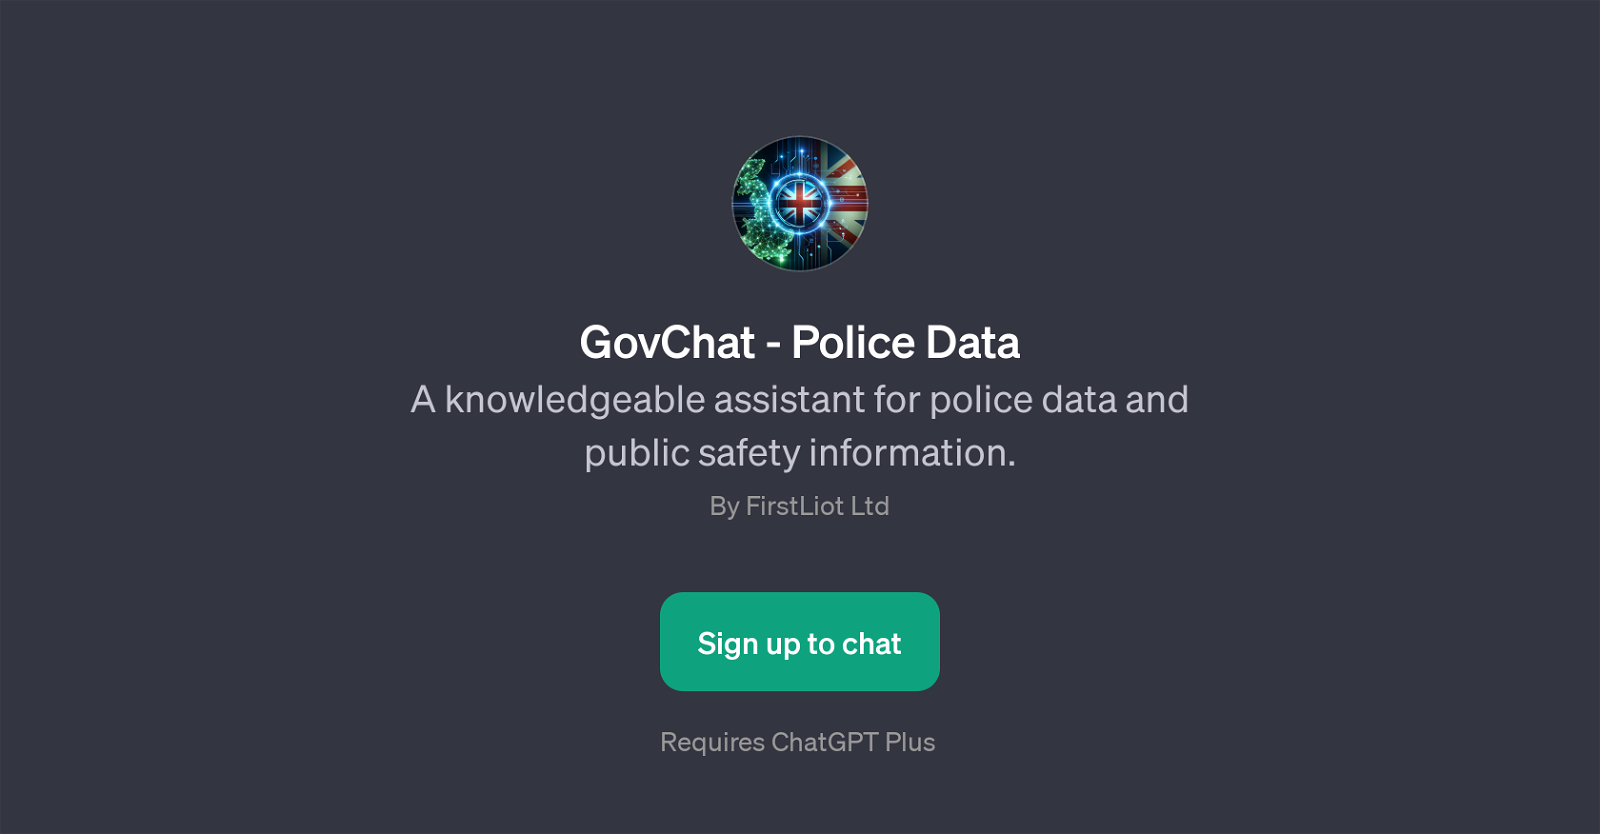 GovChat - Police Data website